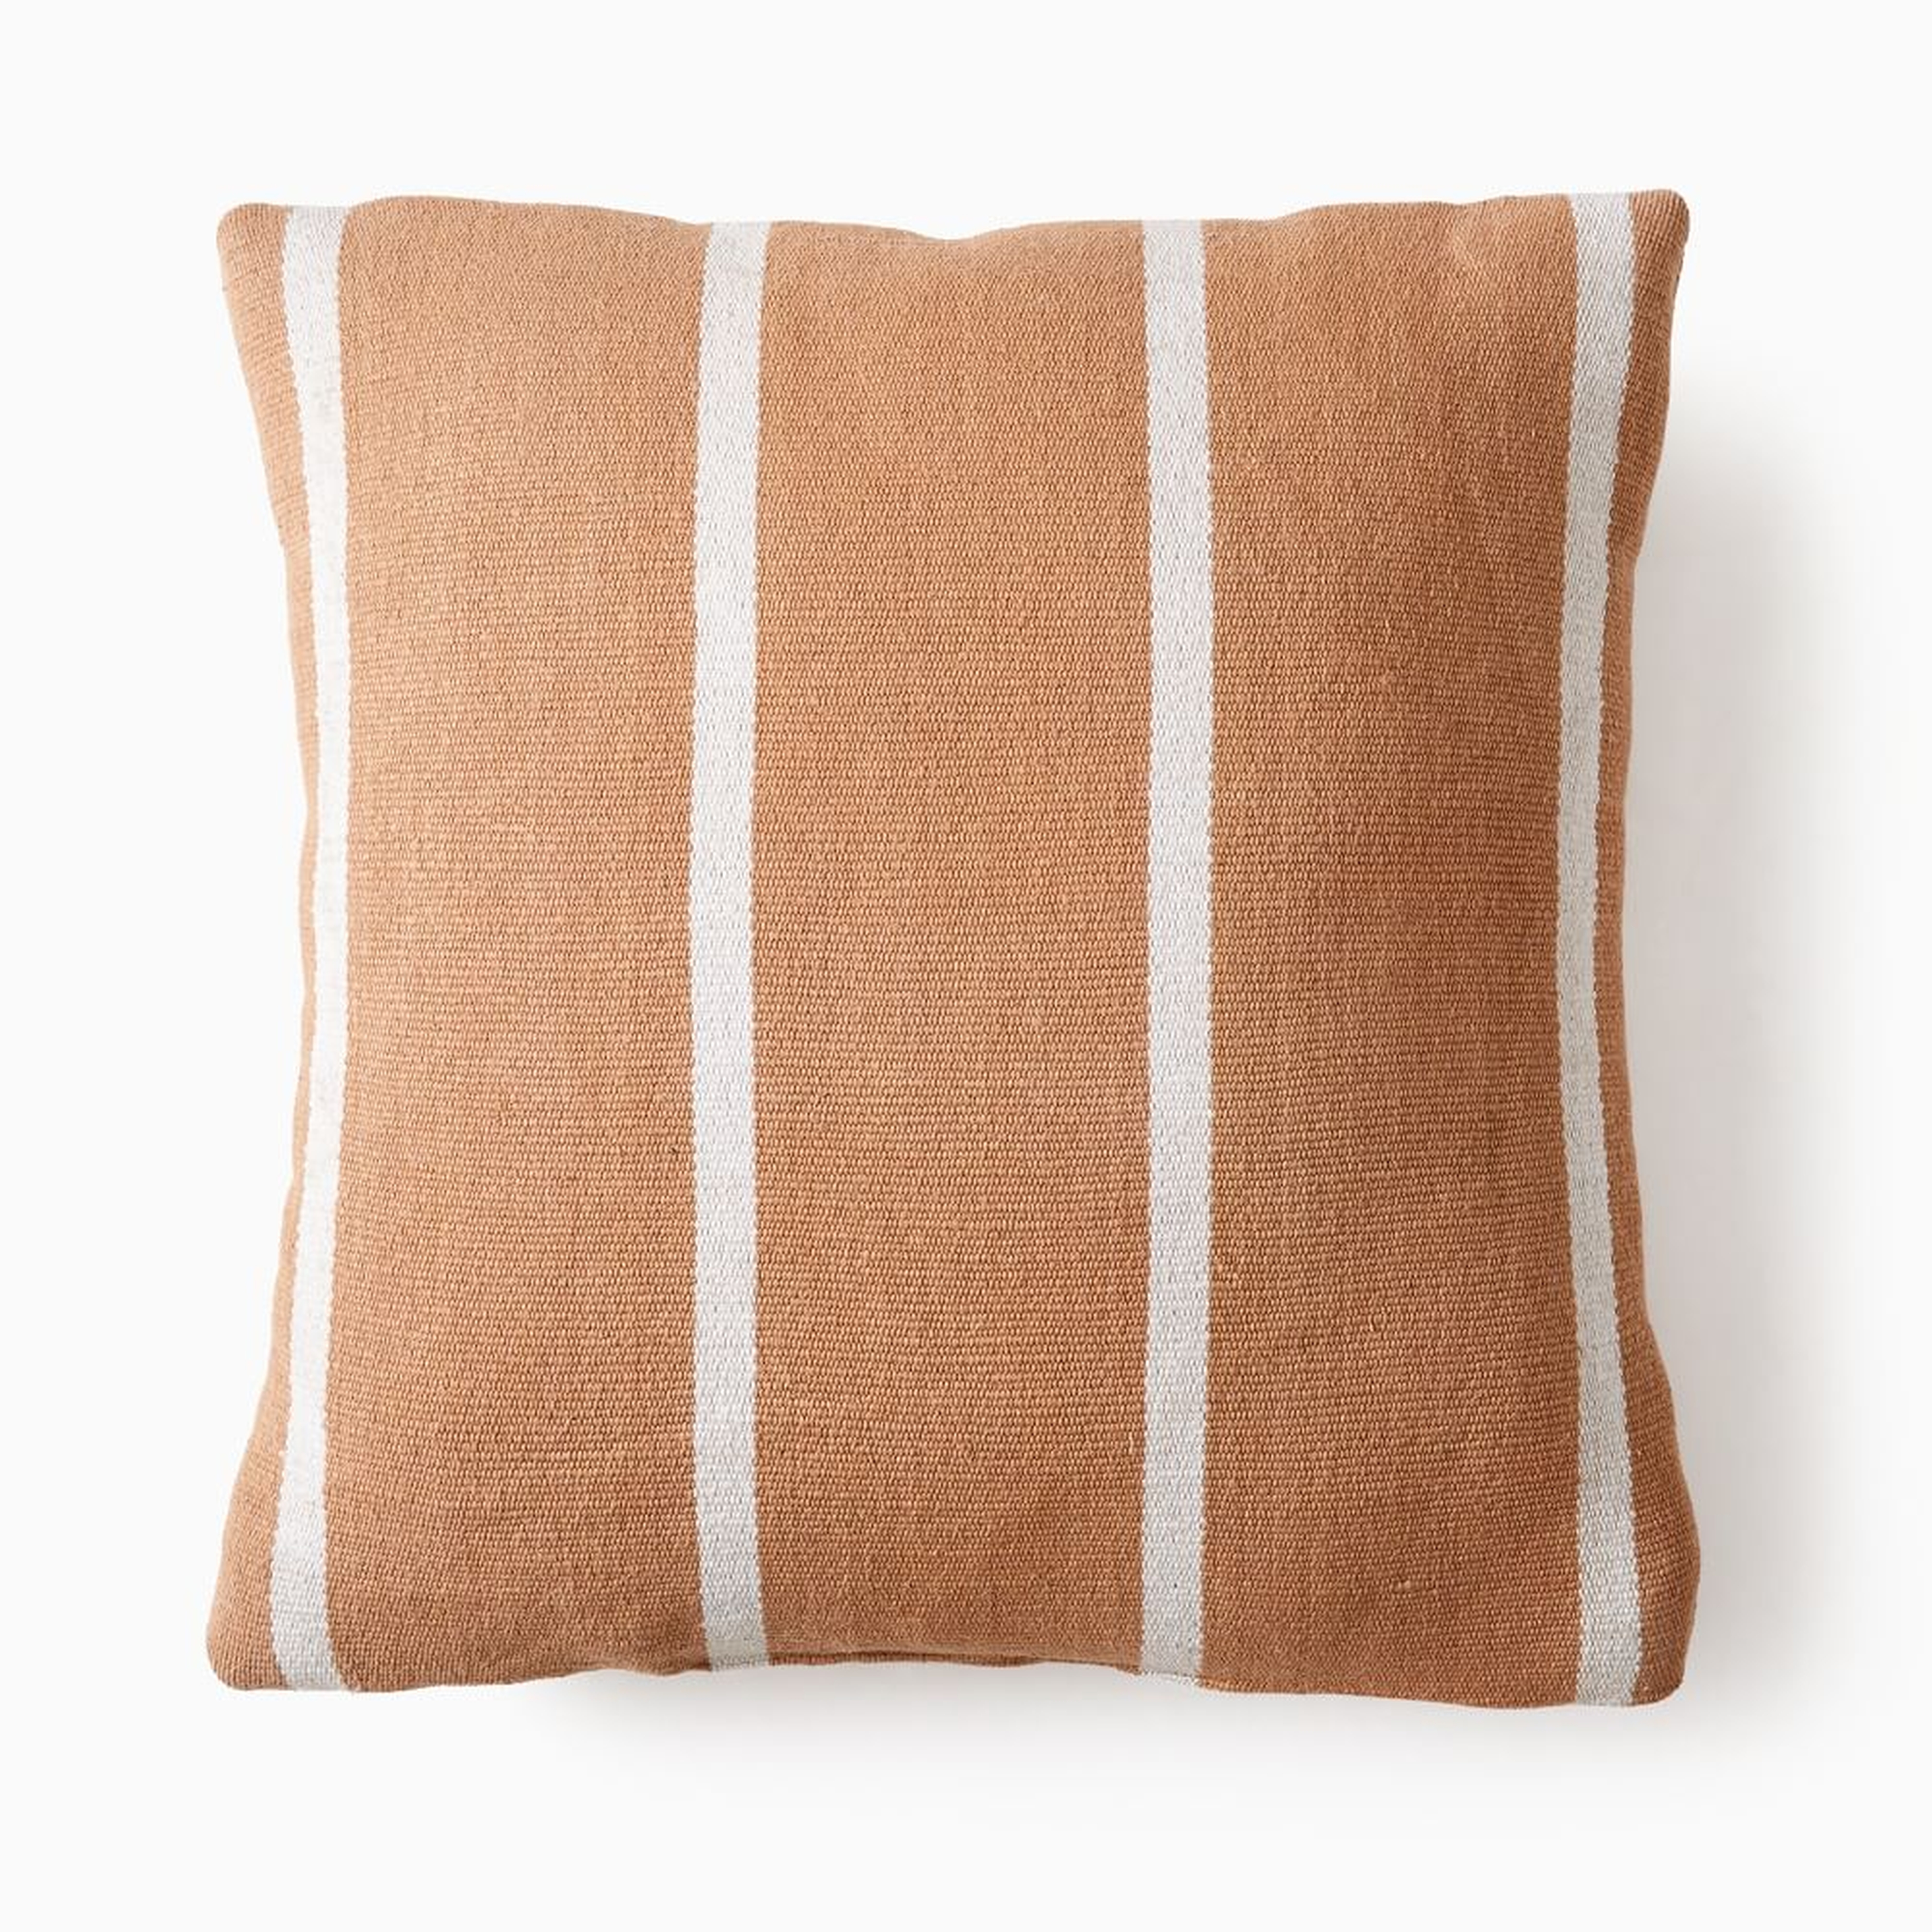 Outdoor Simple Stripe Pillow, 20"x20", Camel, Set of 2 - West Elm